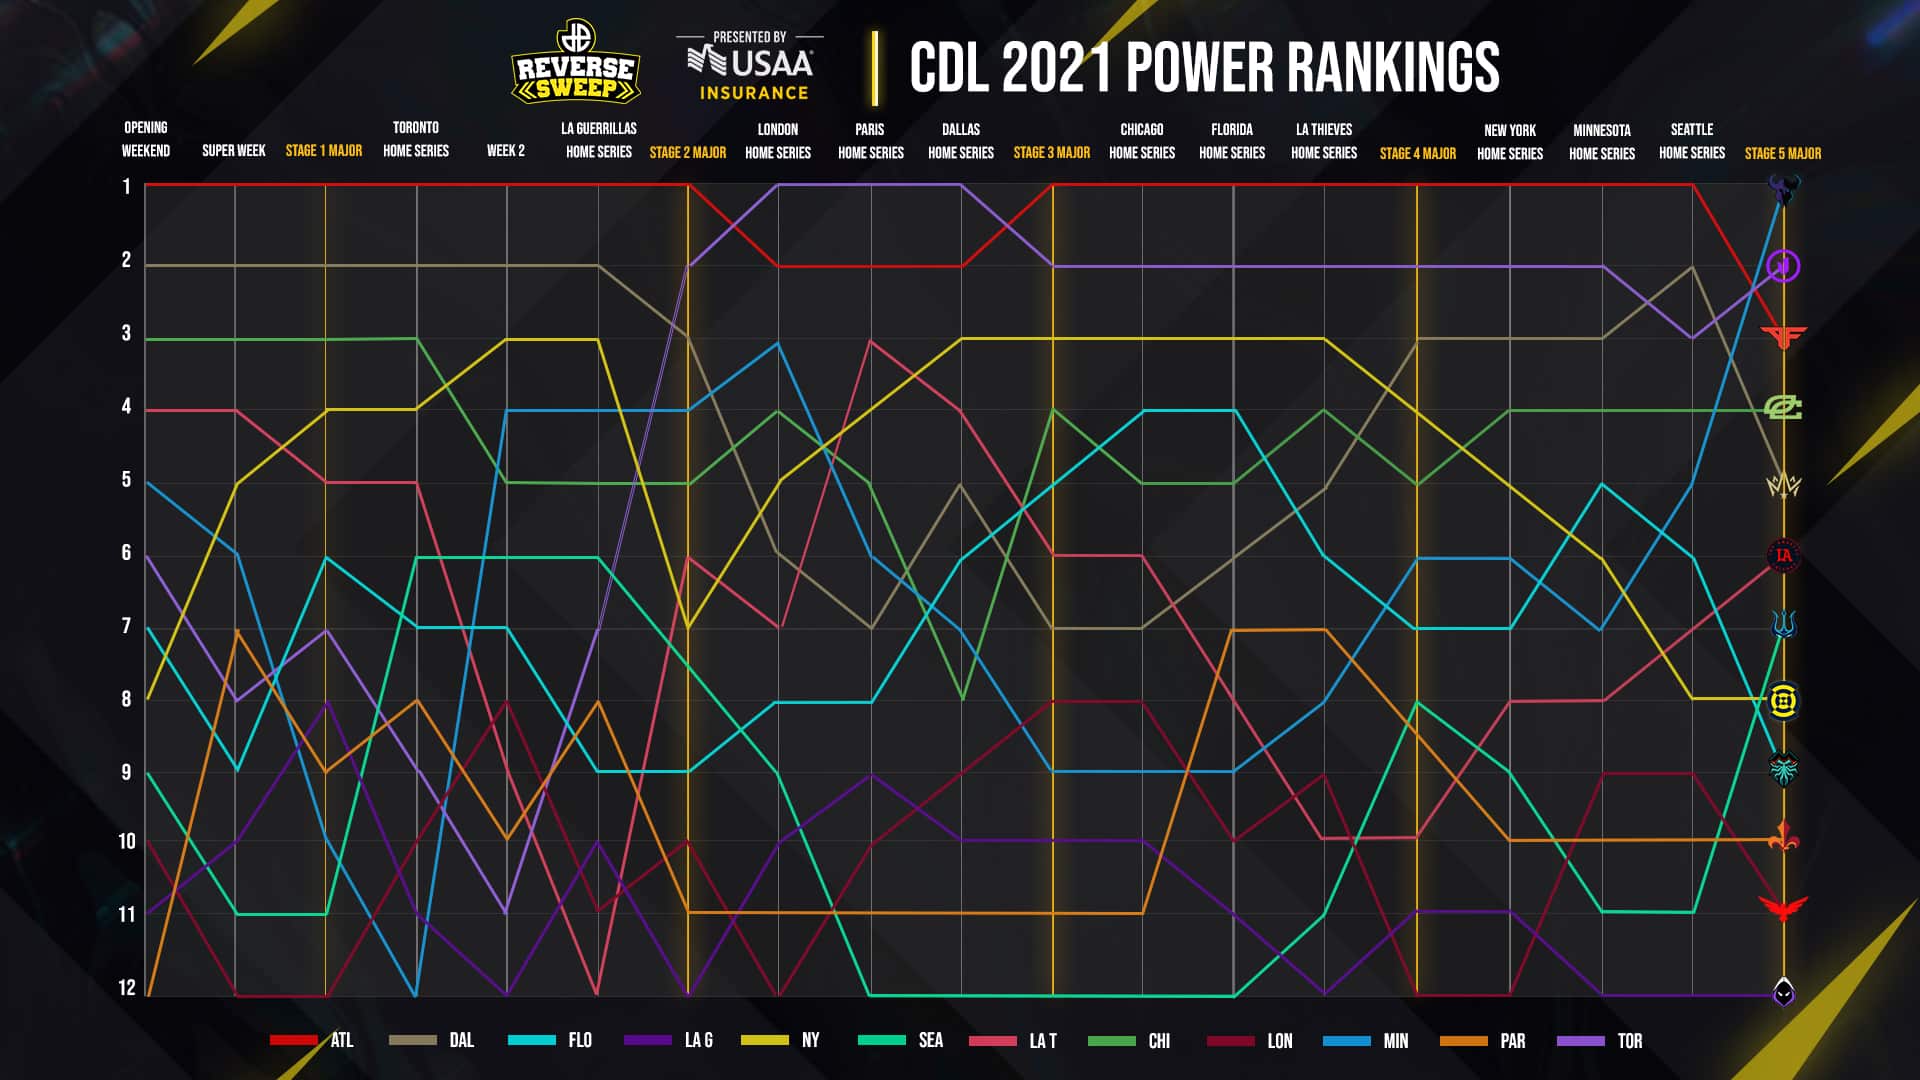 CDL power rankings throughout the season